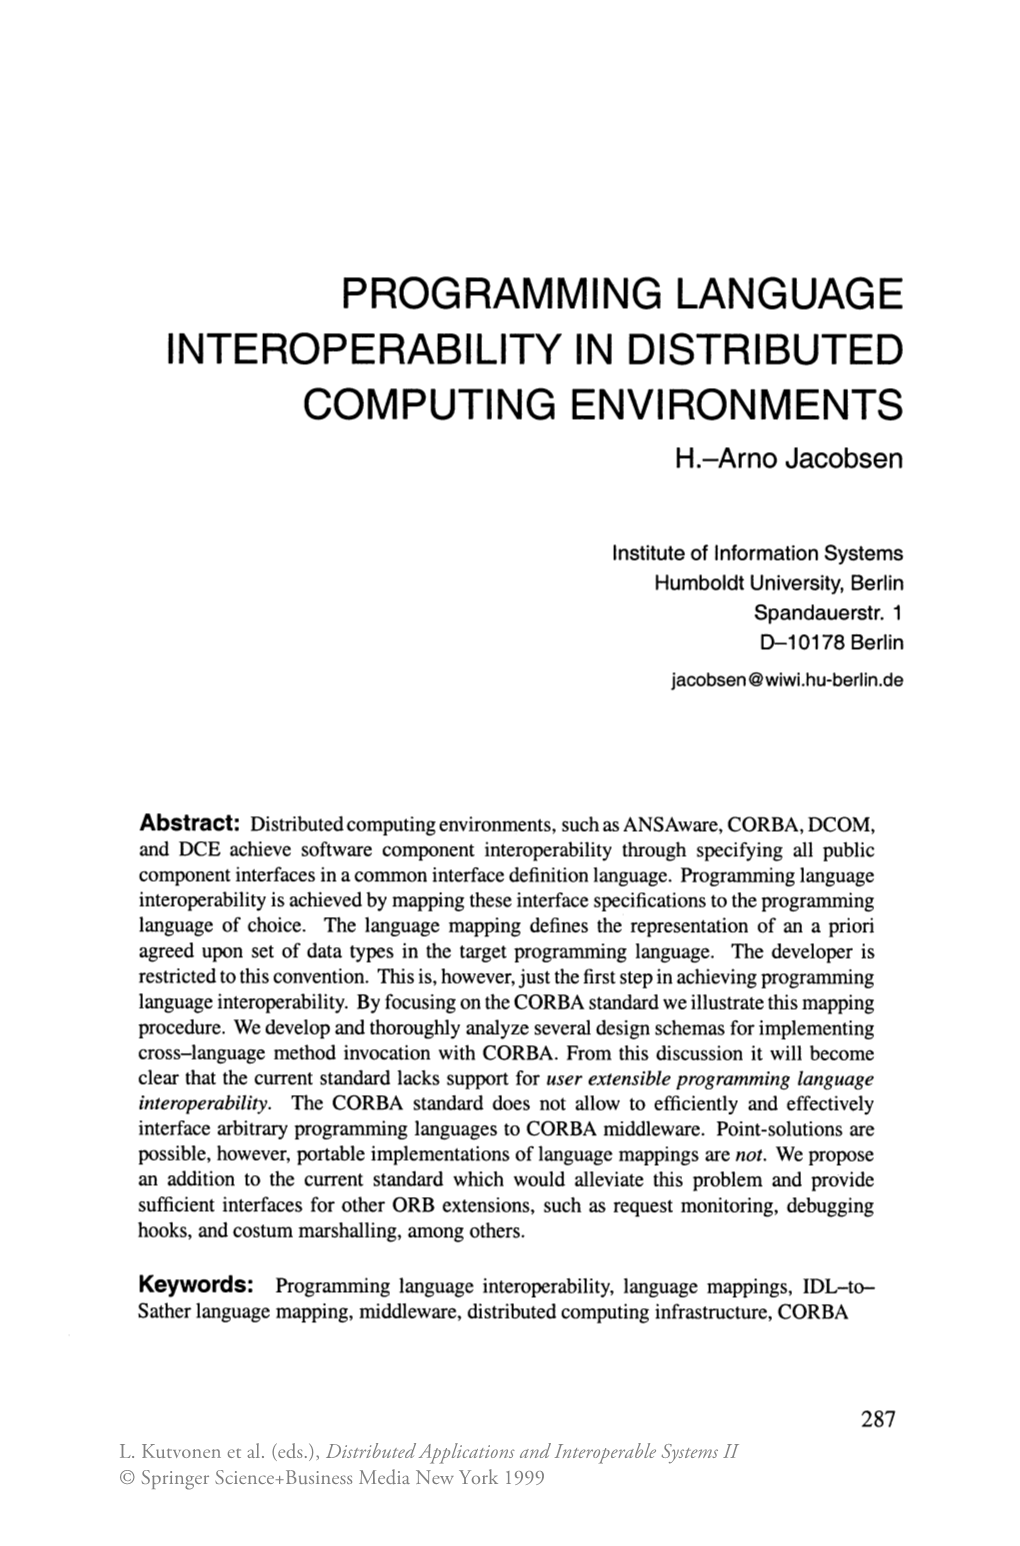 PROGRAMMING LANGUAGE INTEROPERABILITY in DISTRIBUTED COMPUTING ENVIRONMENTS H.-Arno Jacobsen